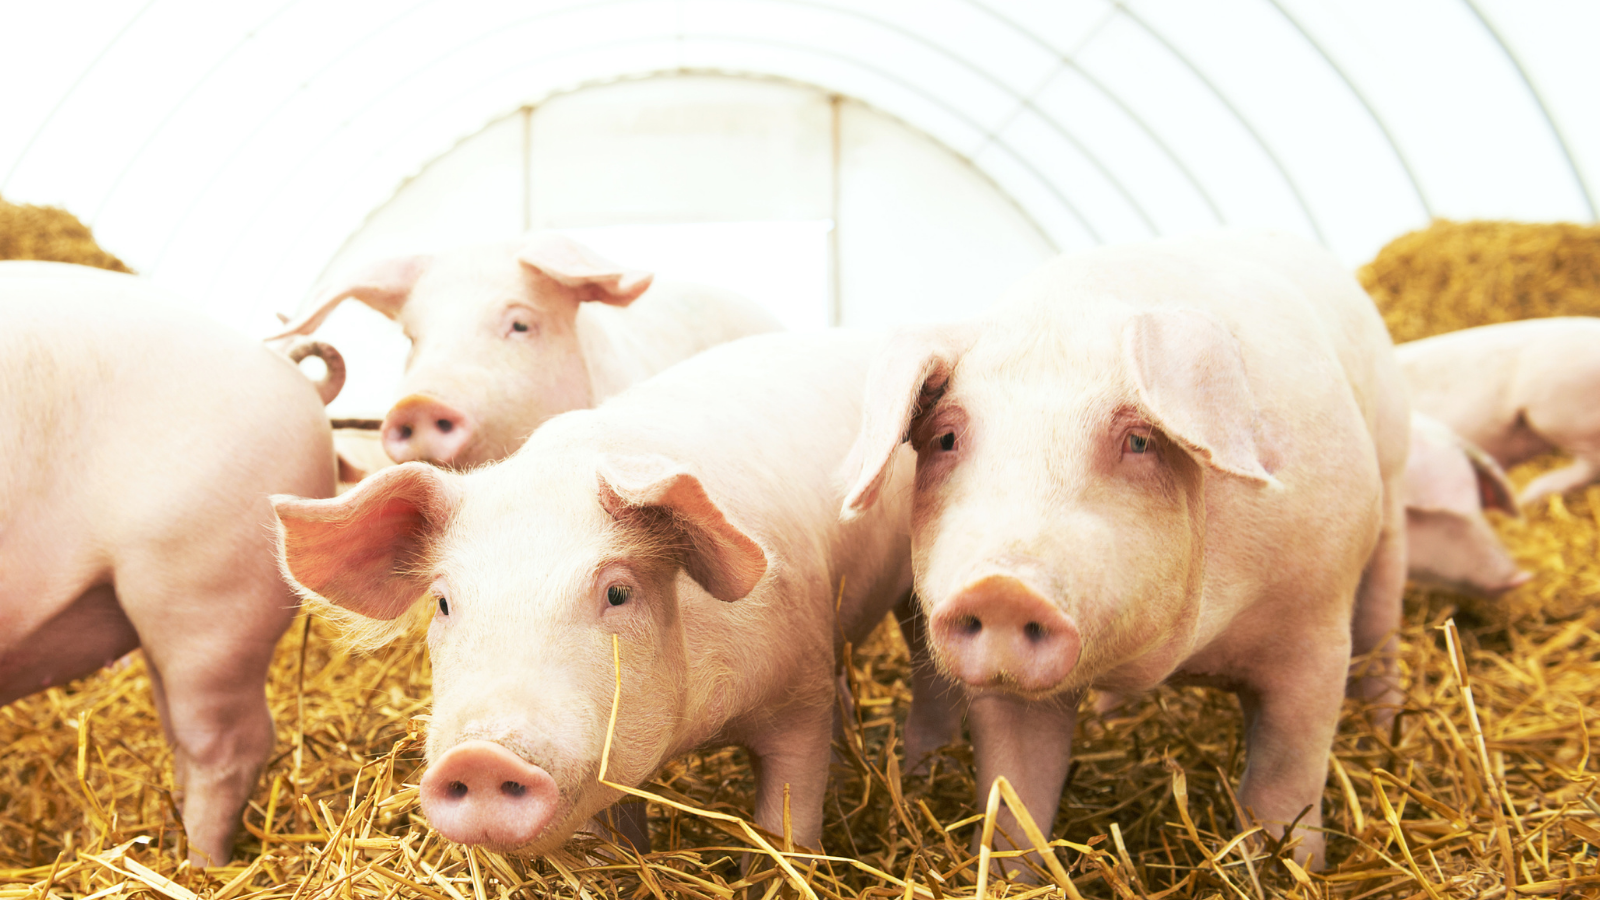 Ekogea's Pig Farming Case Study